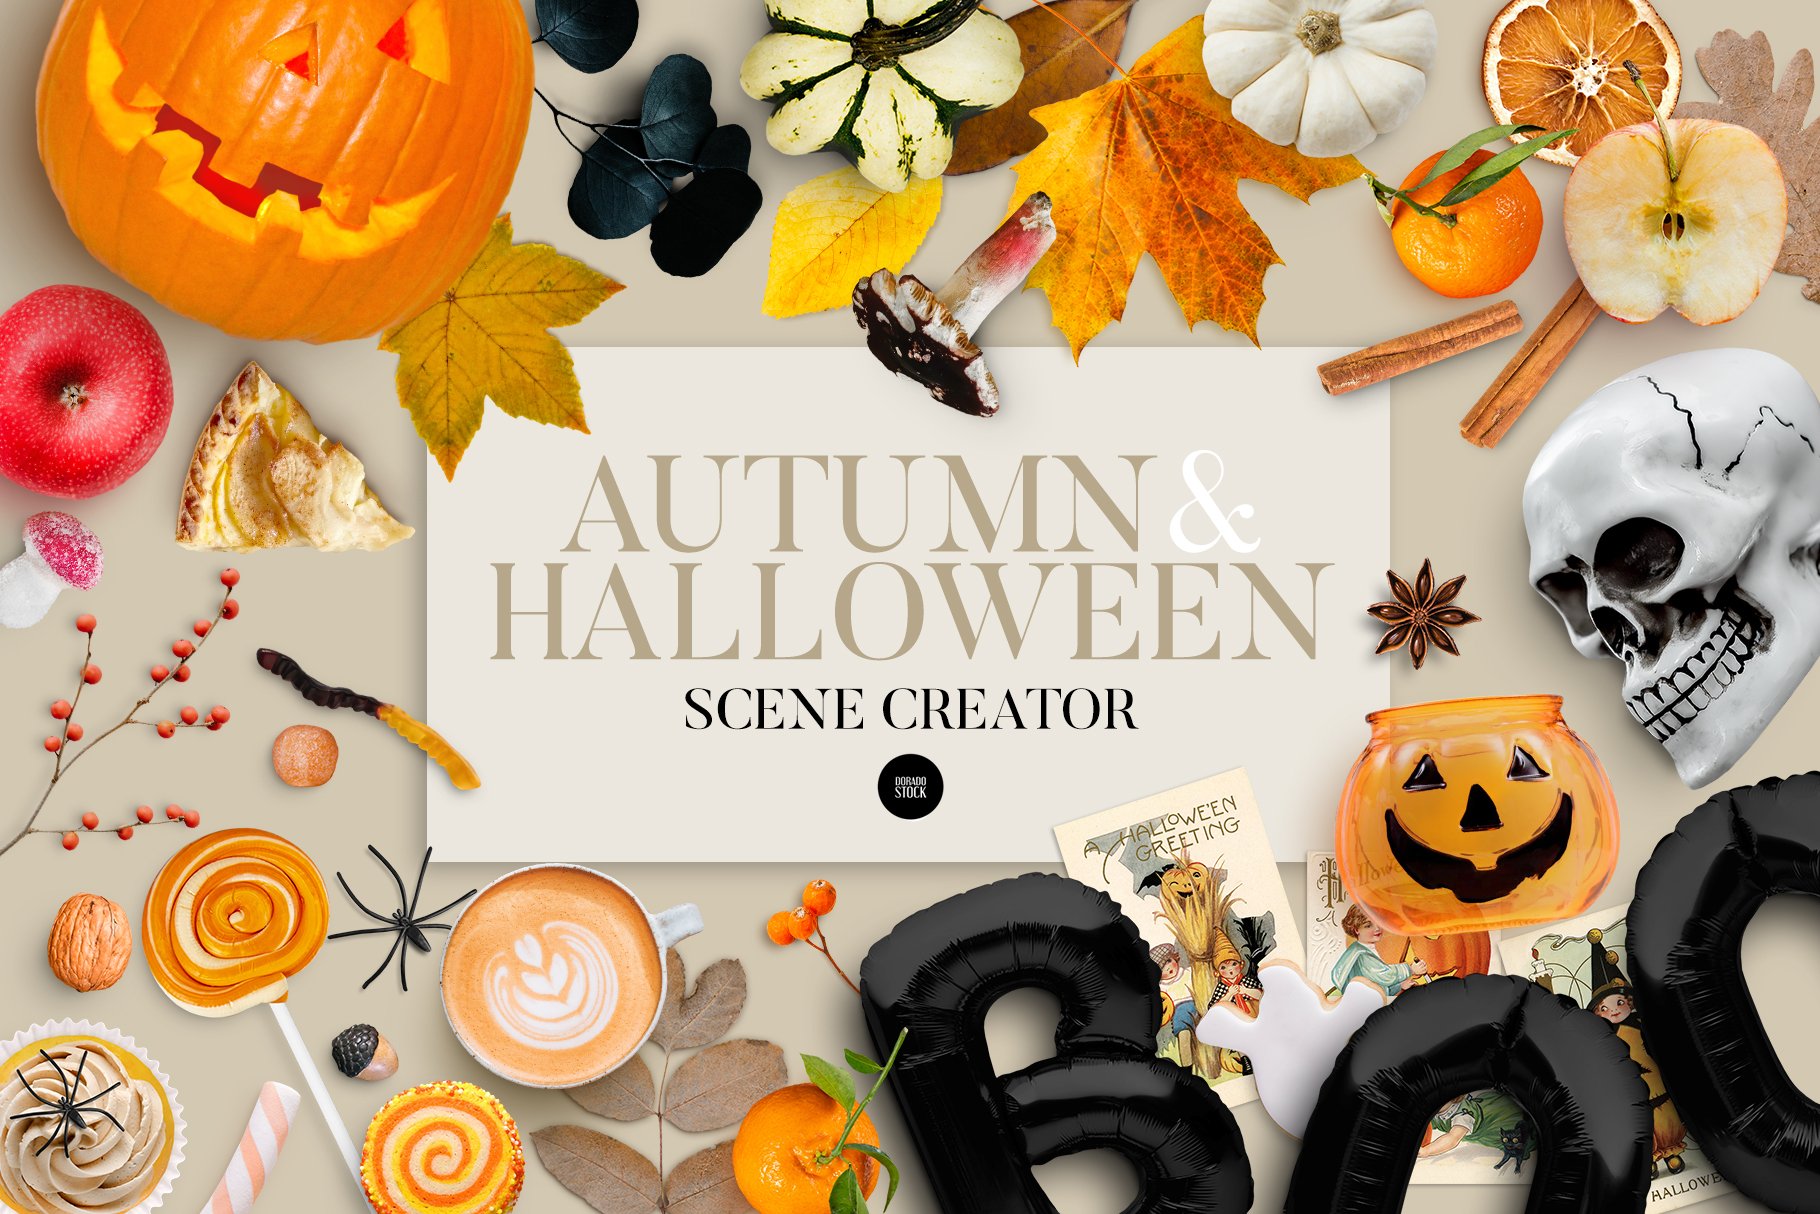 Autumn & Halloween Scene Creator cover image.